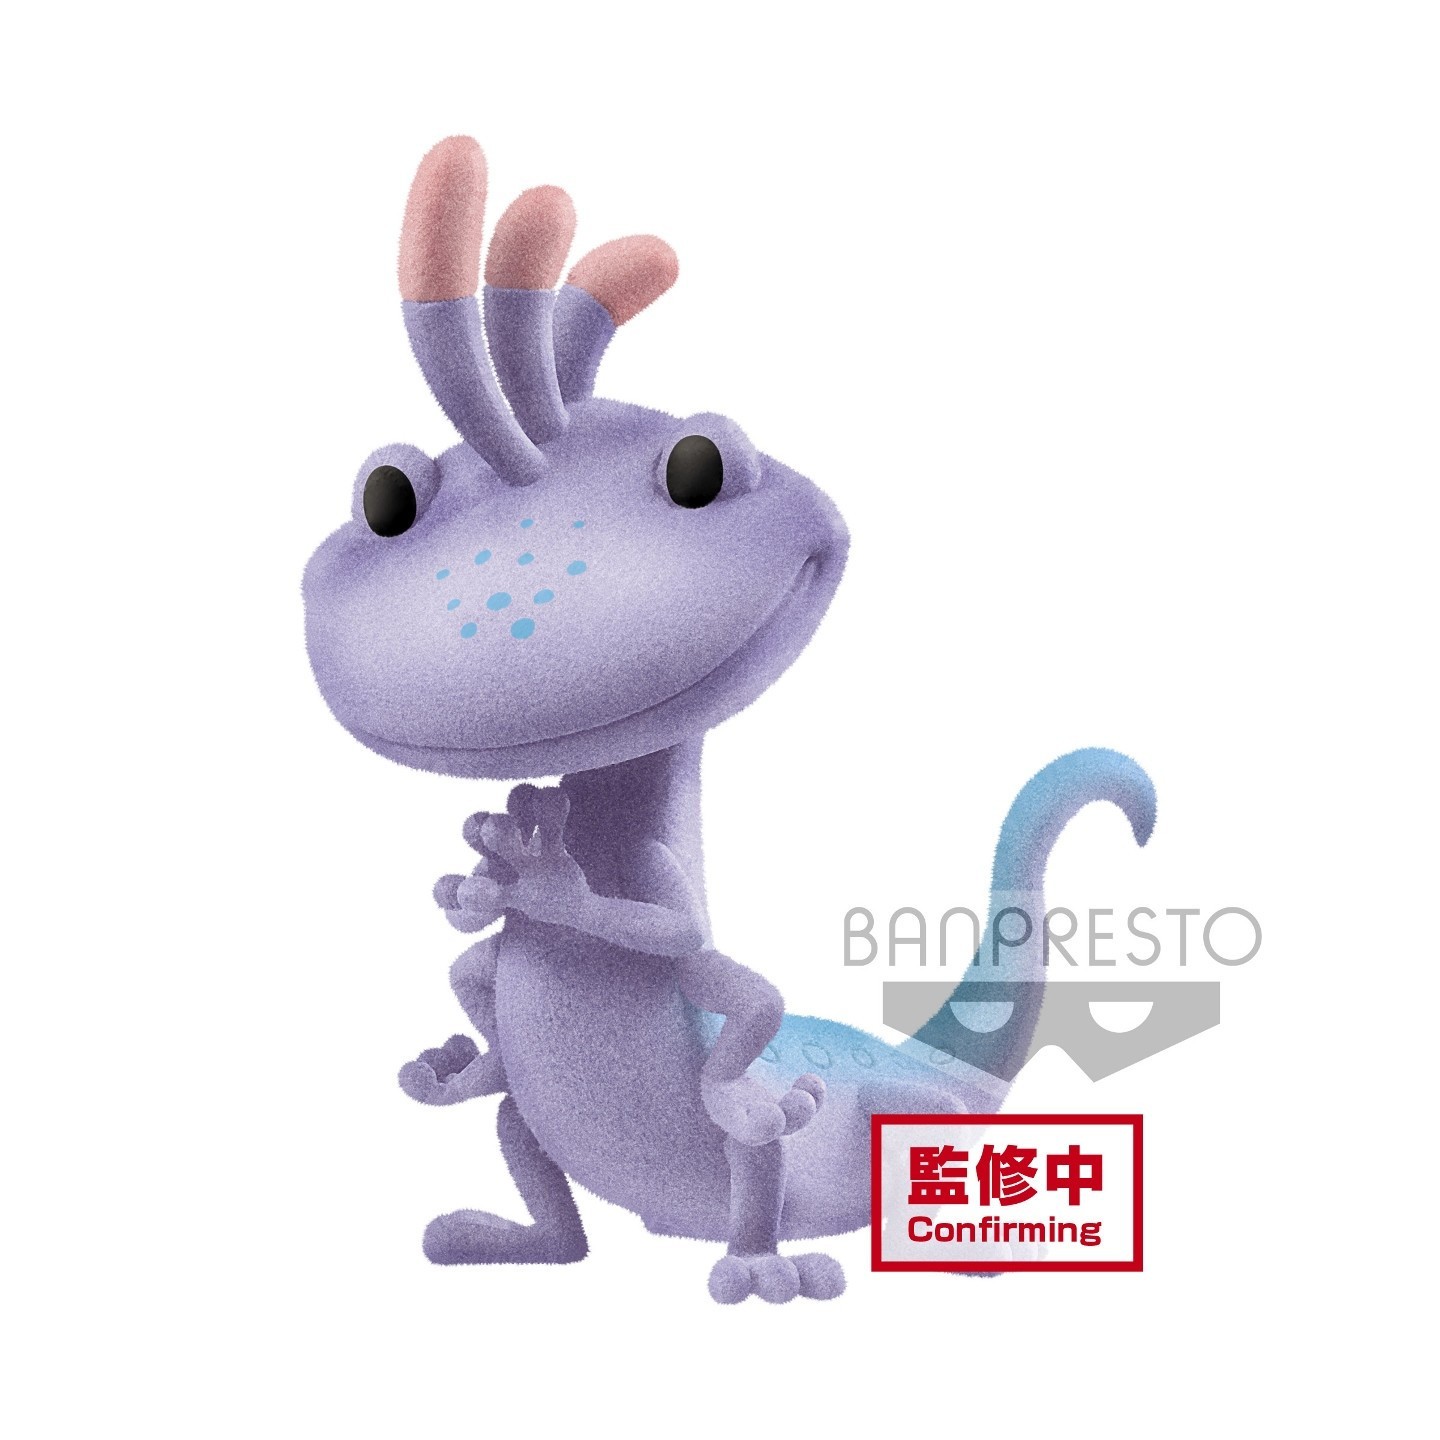 Statuette Banpresto Disney: Personnages Pixar - Monsters Inc. - Fluffy